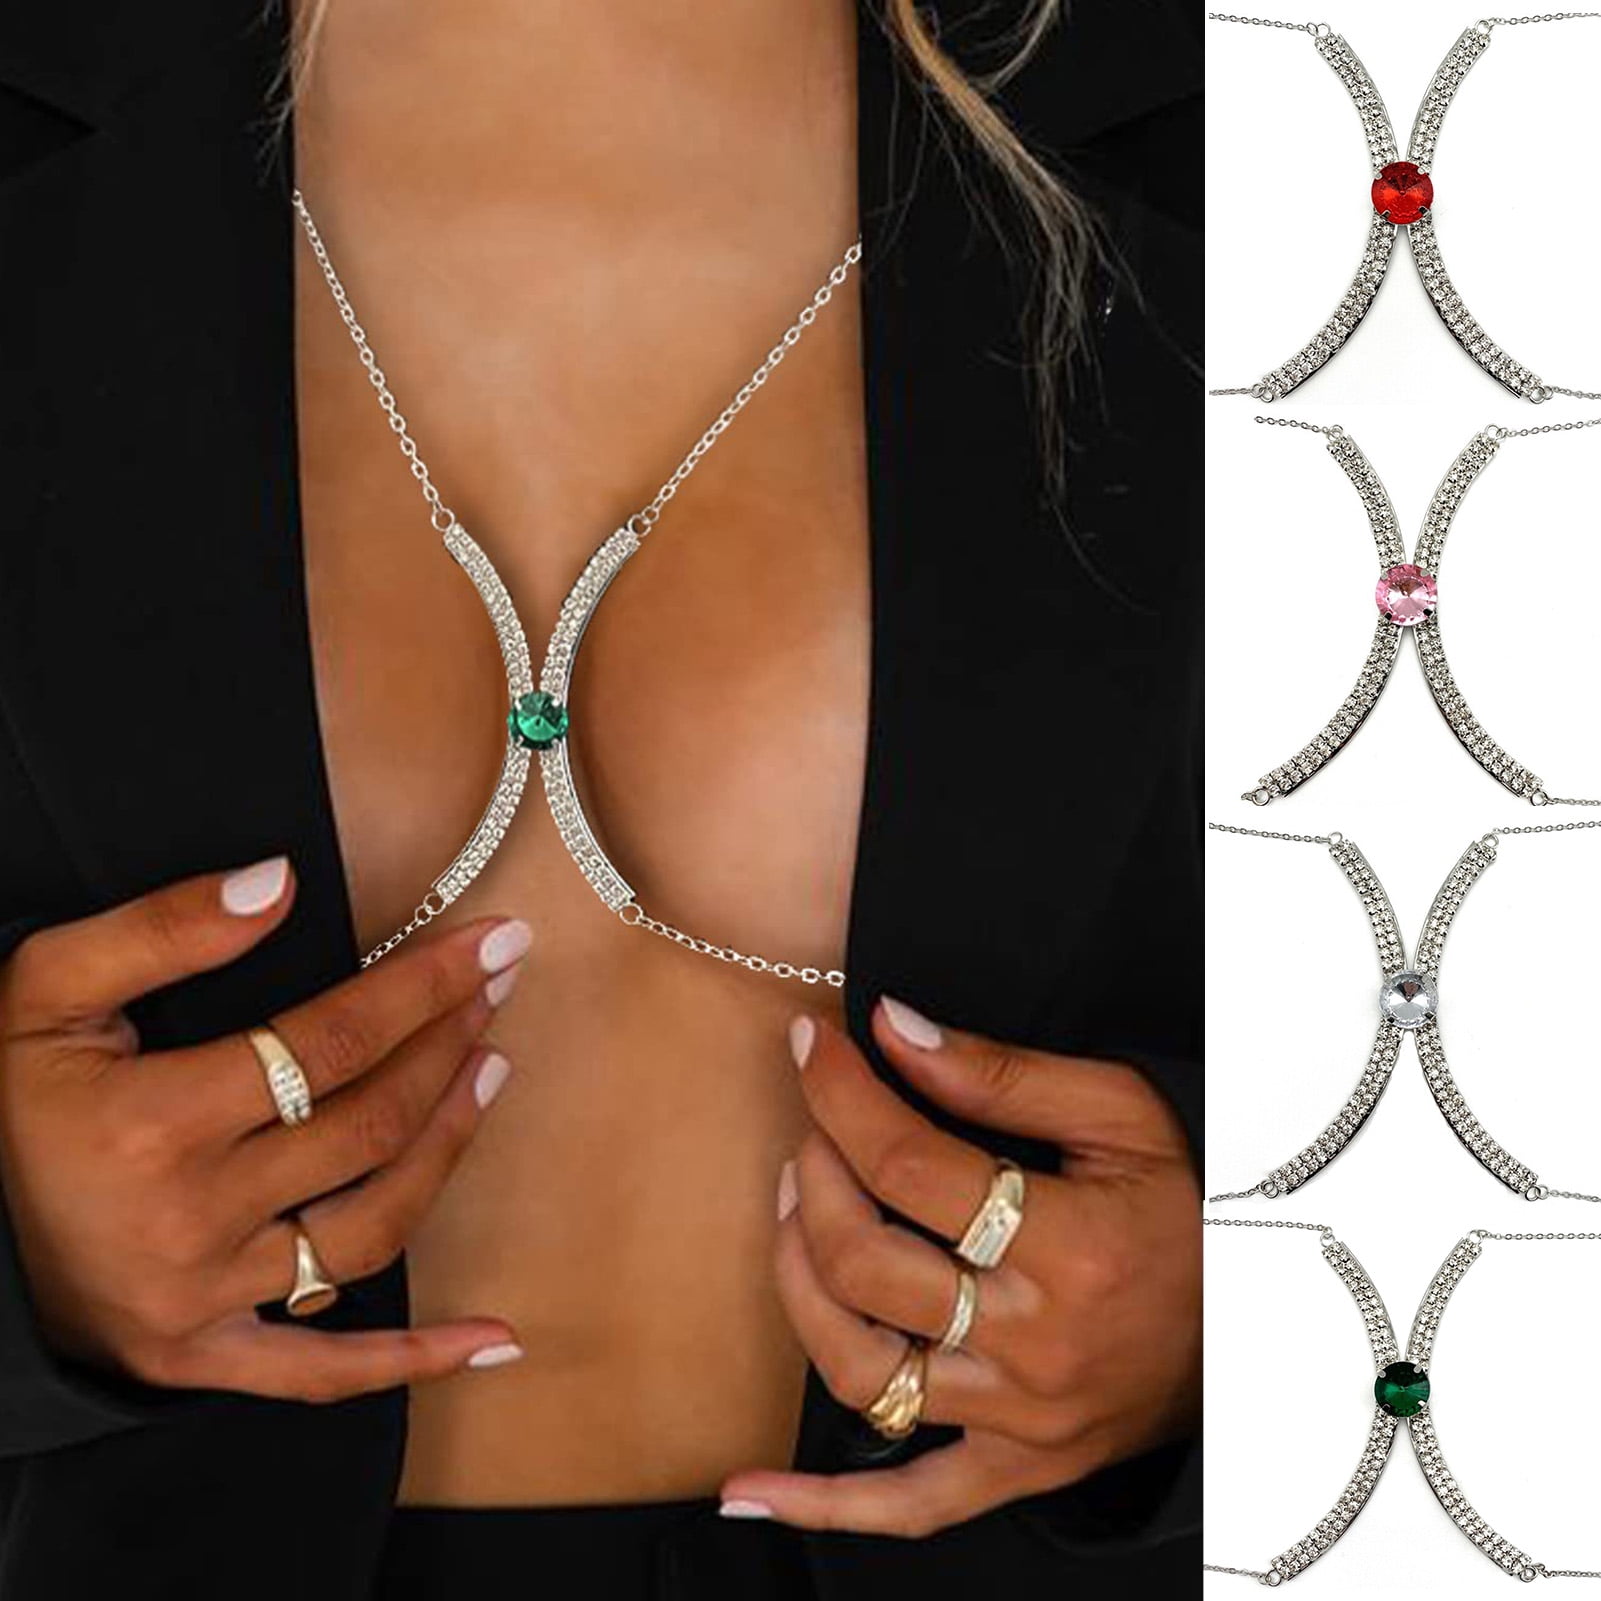 Hesroicy Bra Chain Sexy Adjustable Luxury Dainty Golden Fashion Jewelry  Rhinestone Inlaid Chest Body Chain Club Accessories 